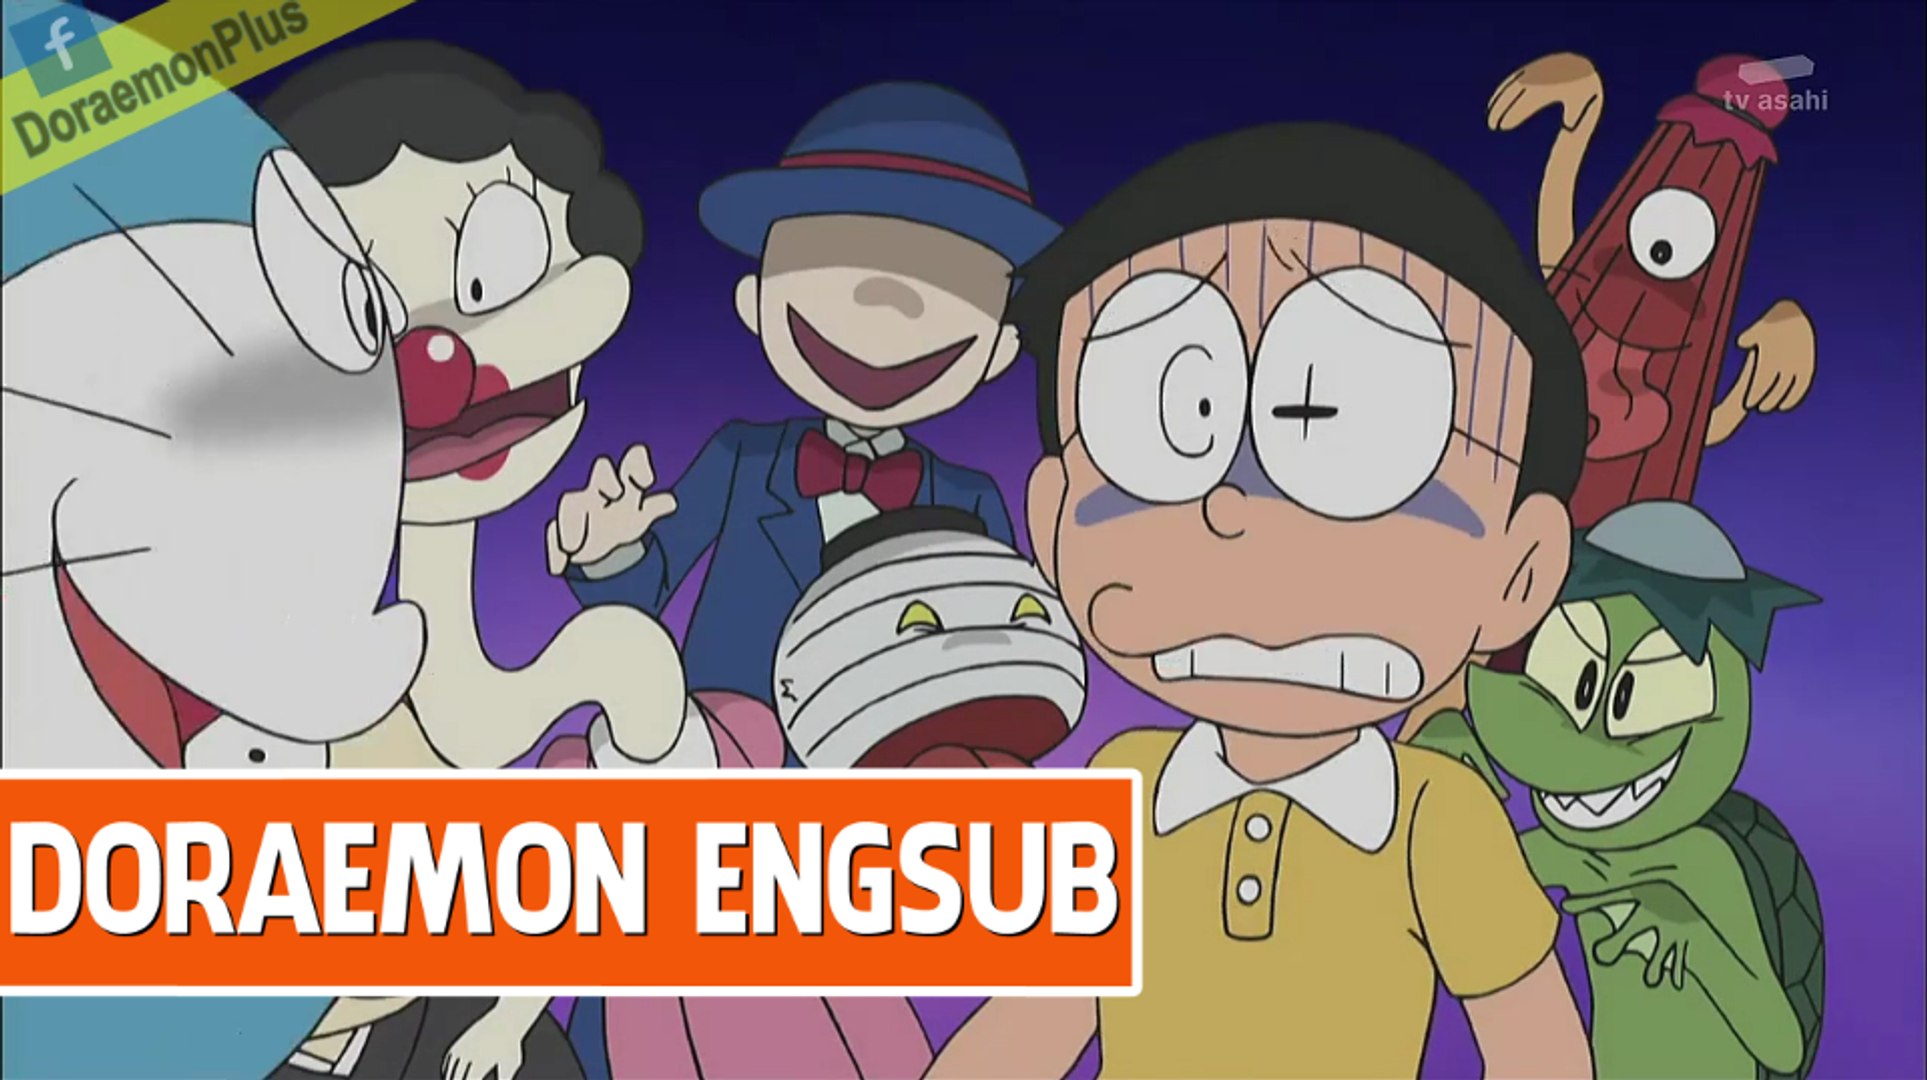 Doraemon ghost episode